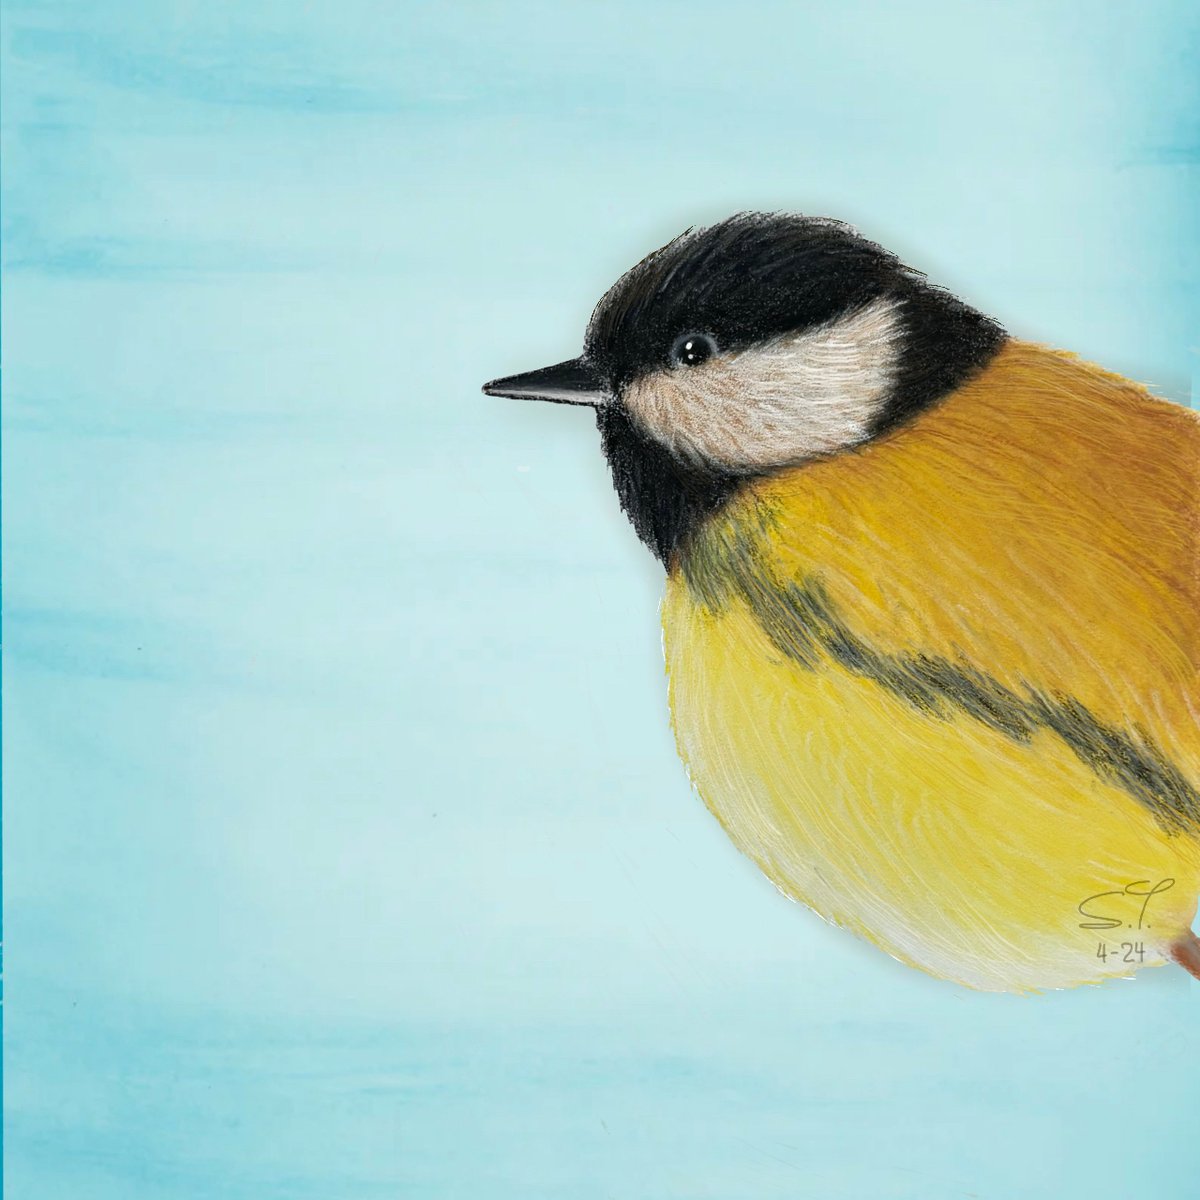 Flight into Freedom🦜#BirdArt
#NatureInspired
#FreedomFlight
#CreativePainting
#WildlifeArt
#BirdWatching
#ArtisticExpression
#PaintingOfTheDay
#InspiredByNature
#FeatheredFriends
#BirdLovers
#CanvasArt
#BeautifulBirds
#Sandrilina
#PaintAndBrush
#Sketchbook